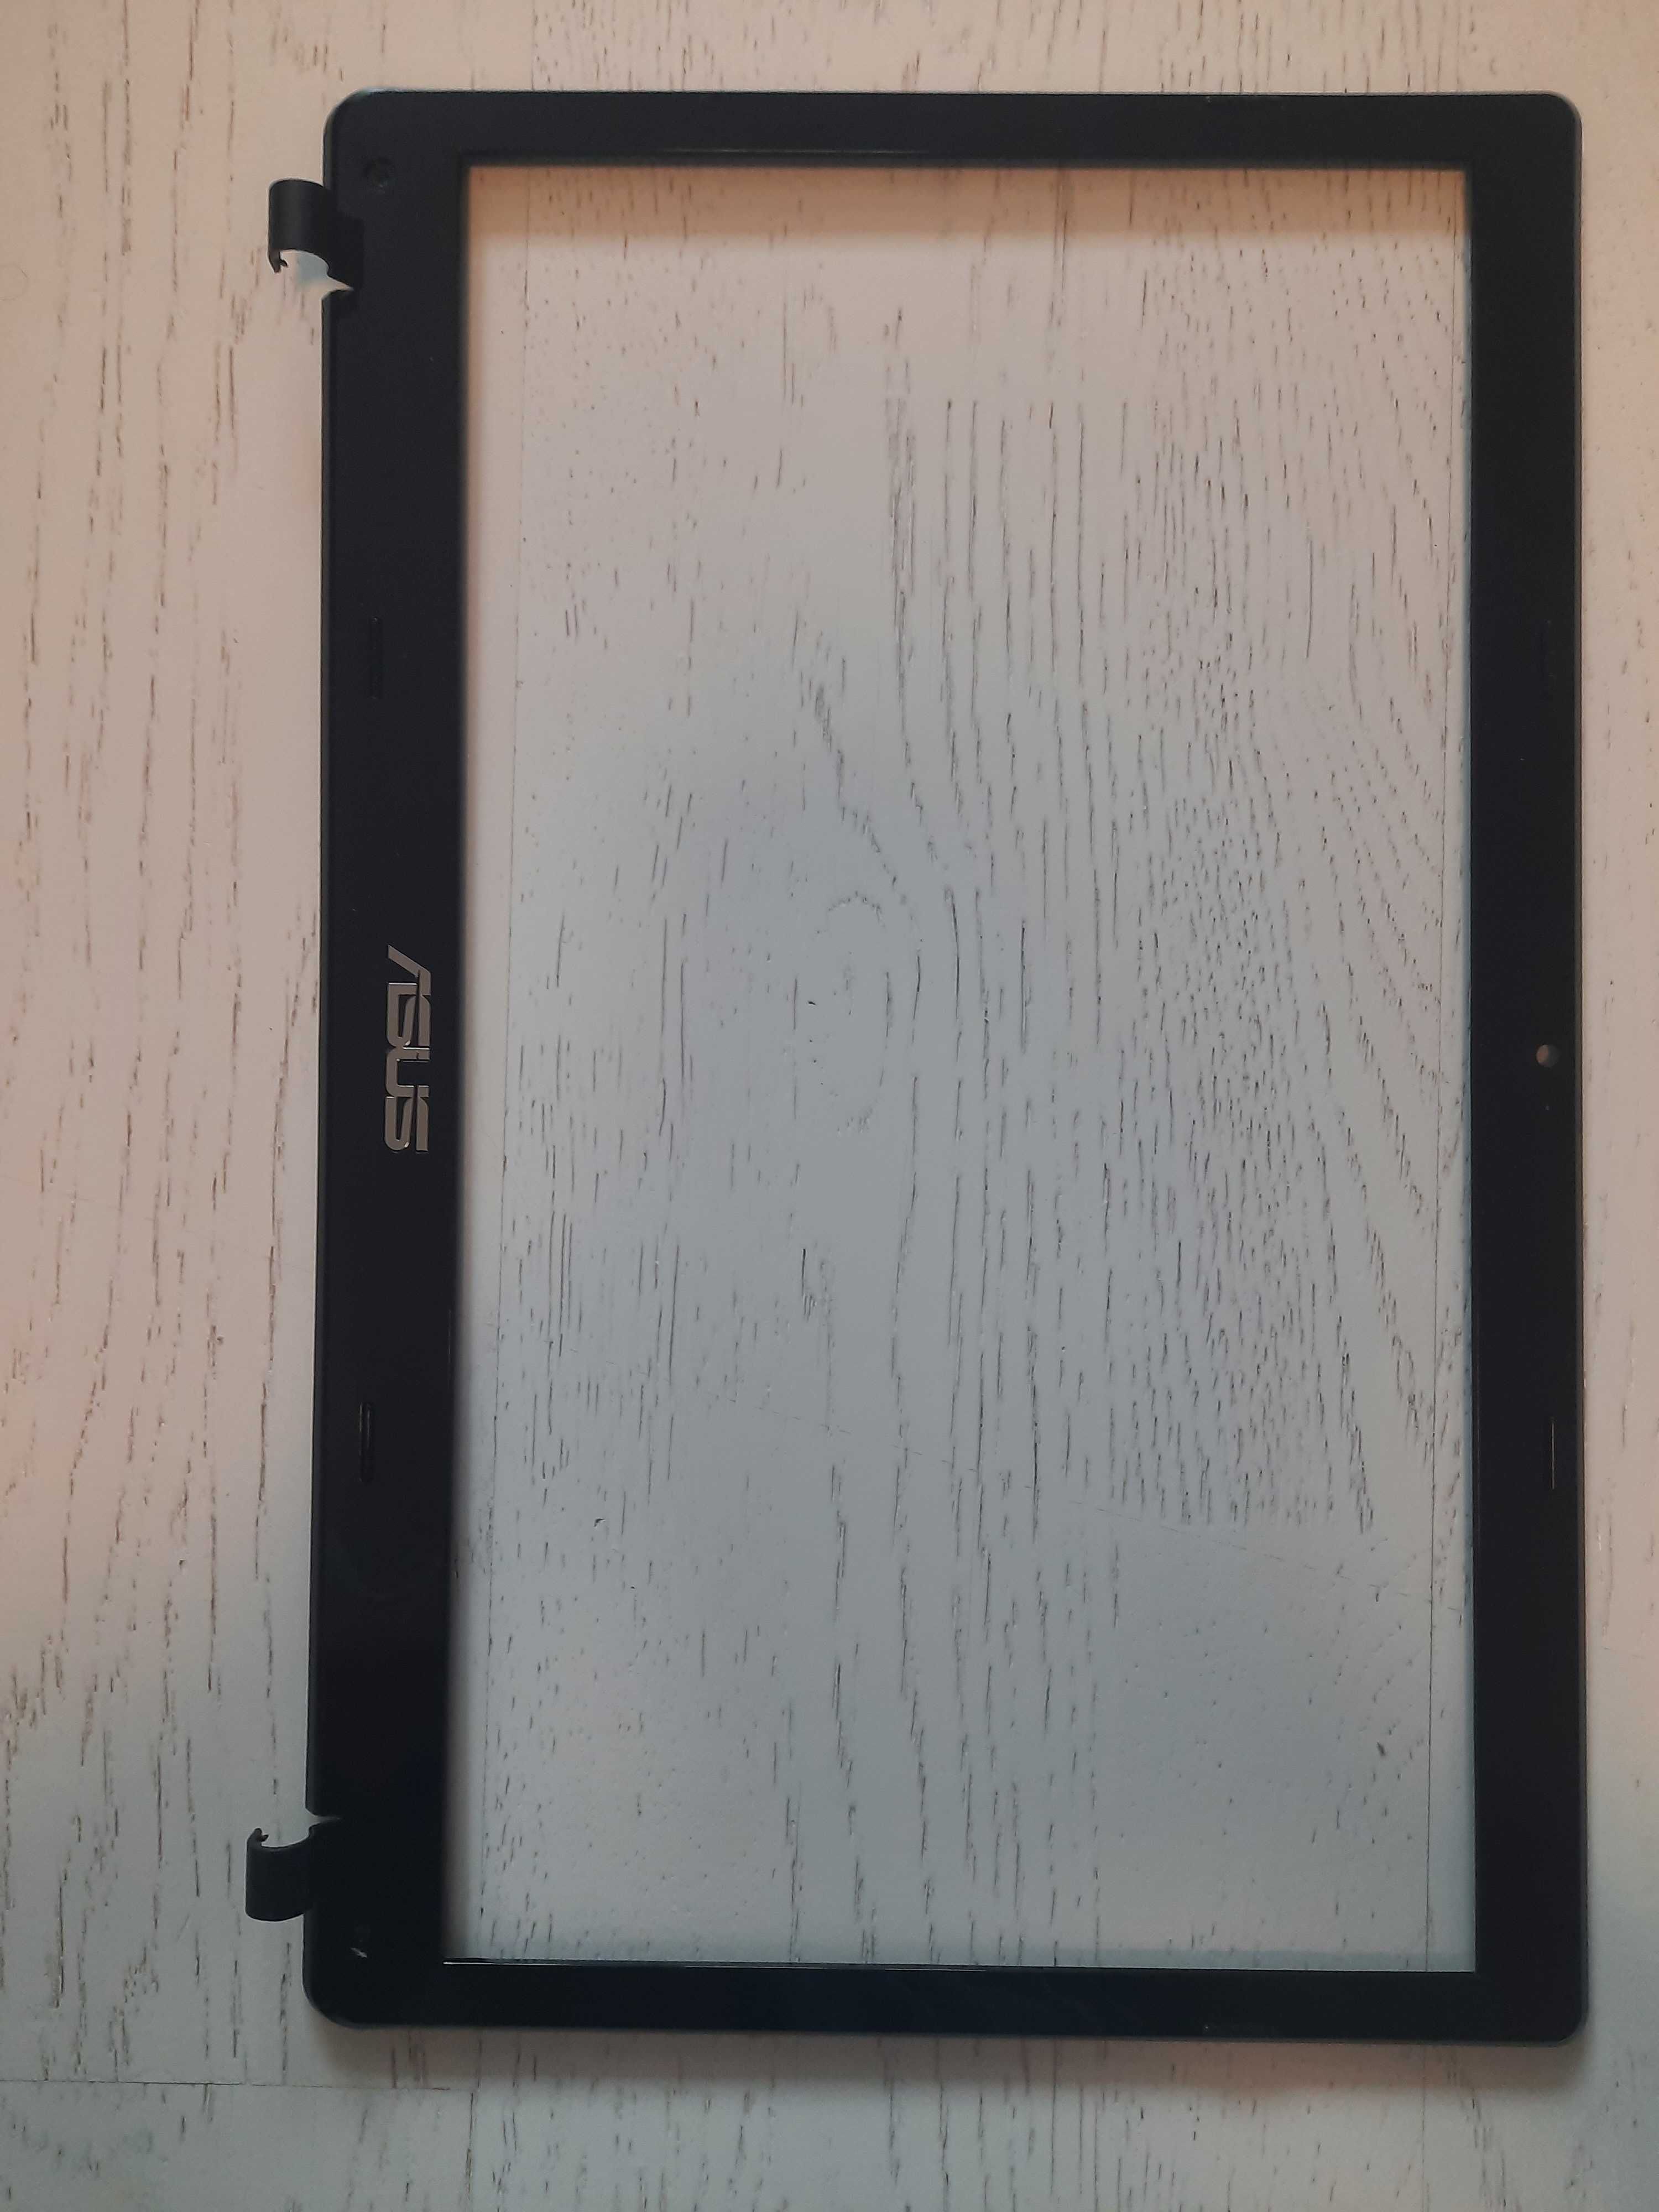 Крышка и рамка экрана ноутбука Asus A53 K53